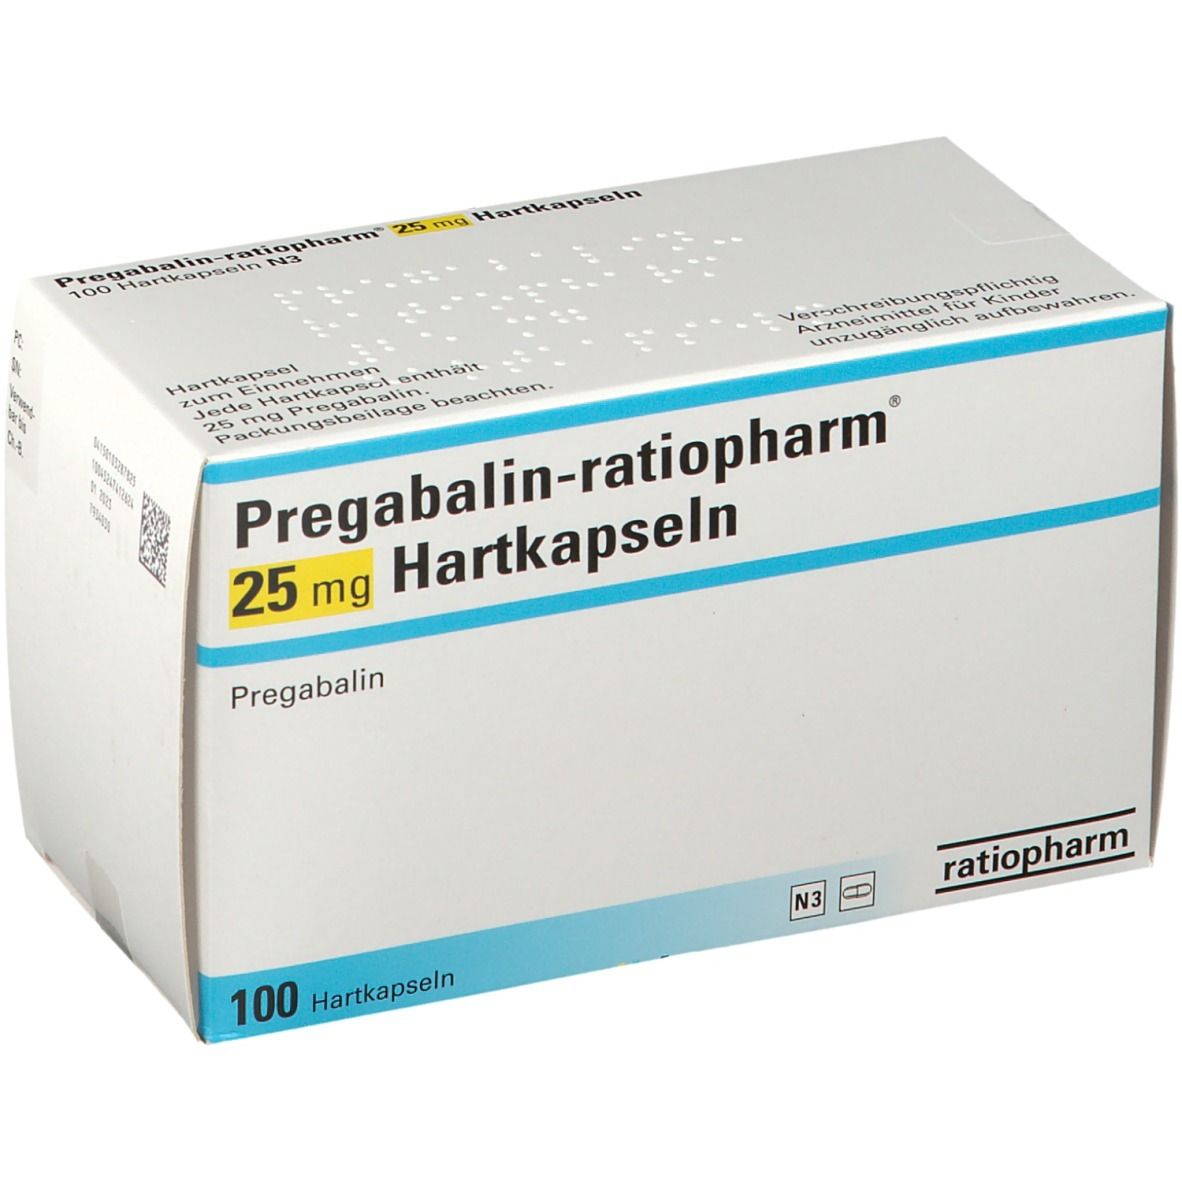 Pregabalin-ratiopharm® 25 mg